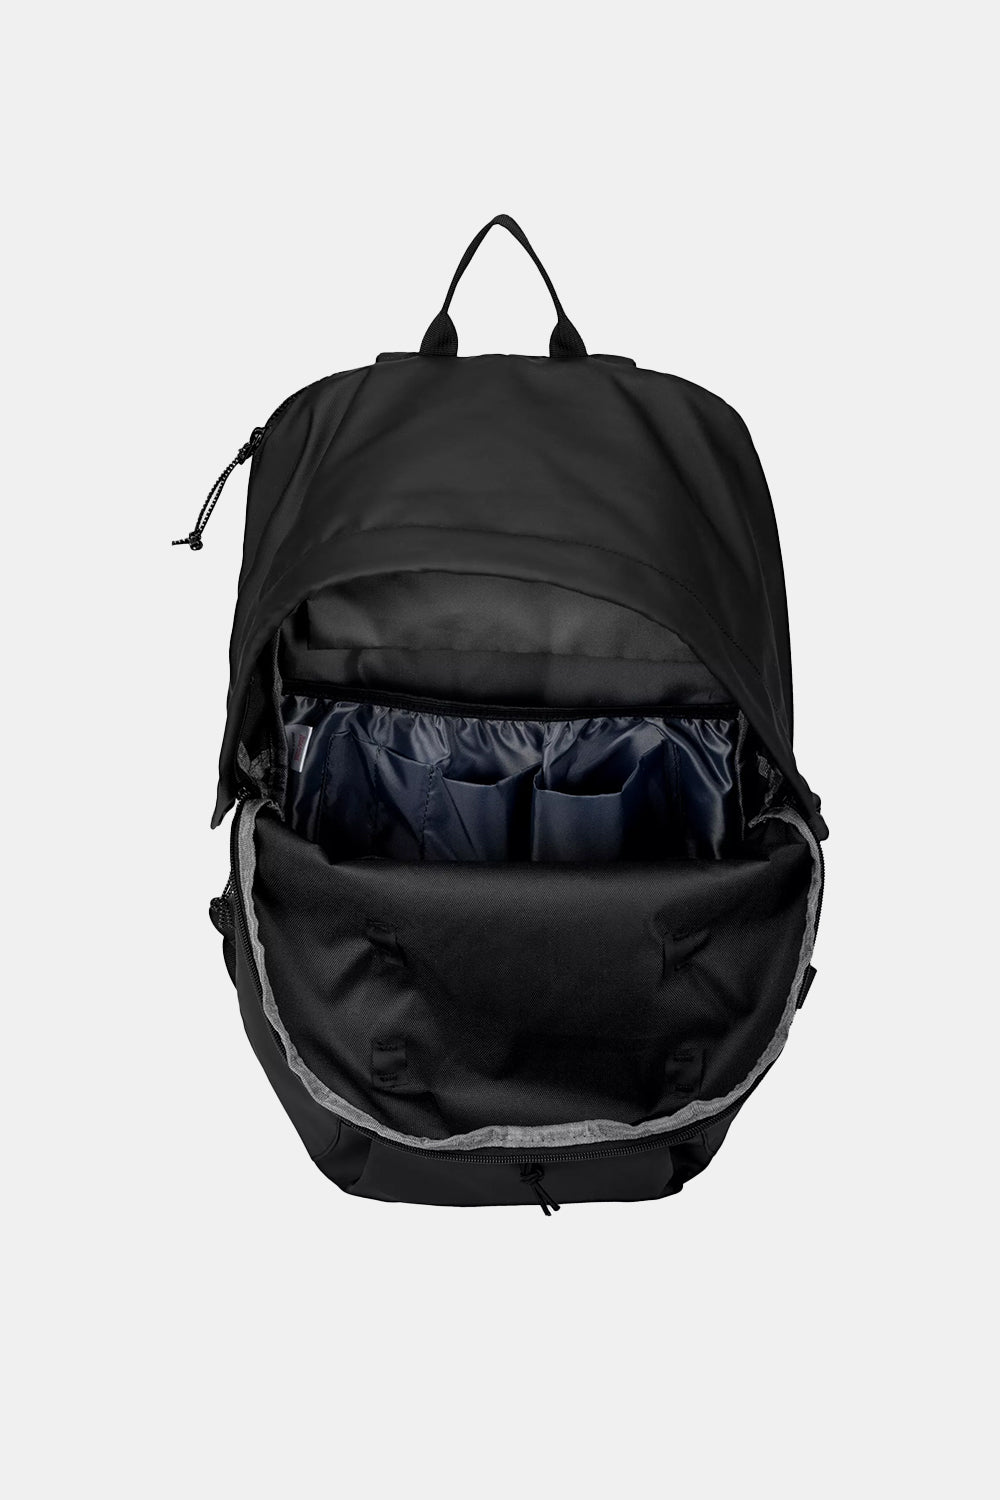 Elliker Kiln Hooded Zip Top Backpack 22L (Black)
